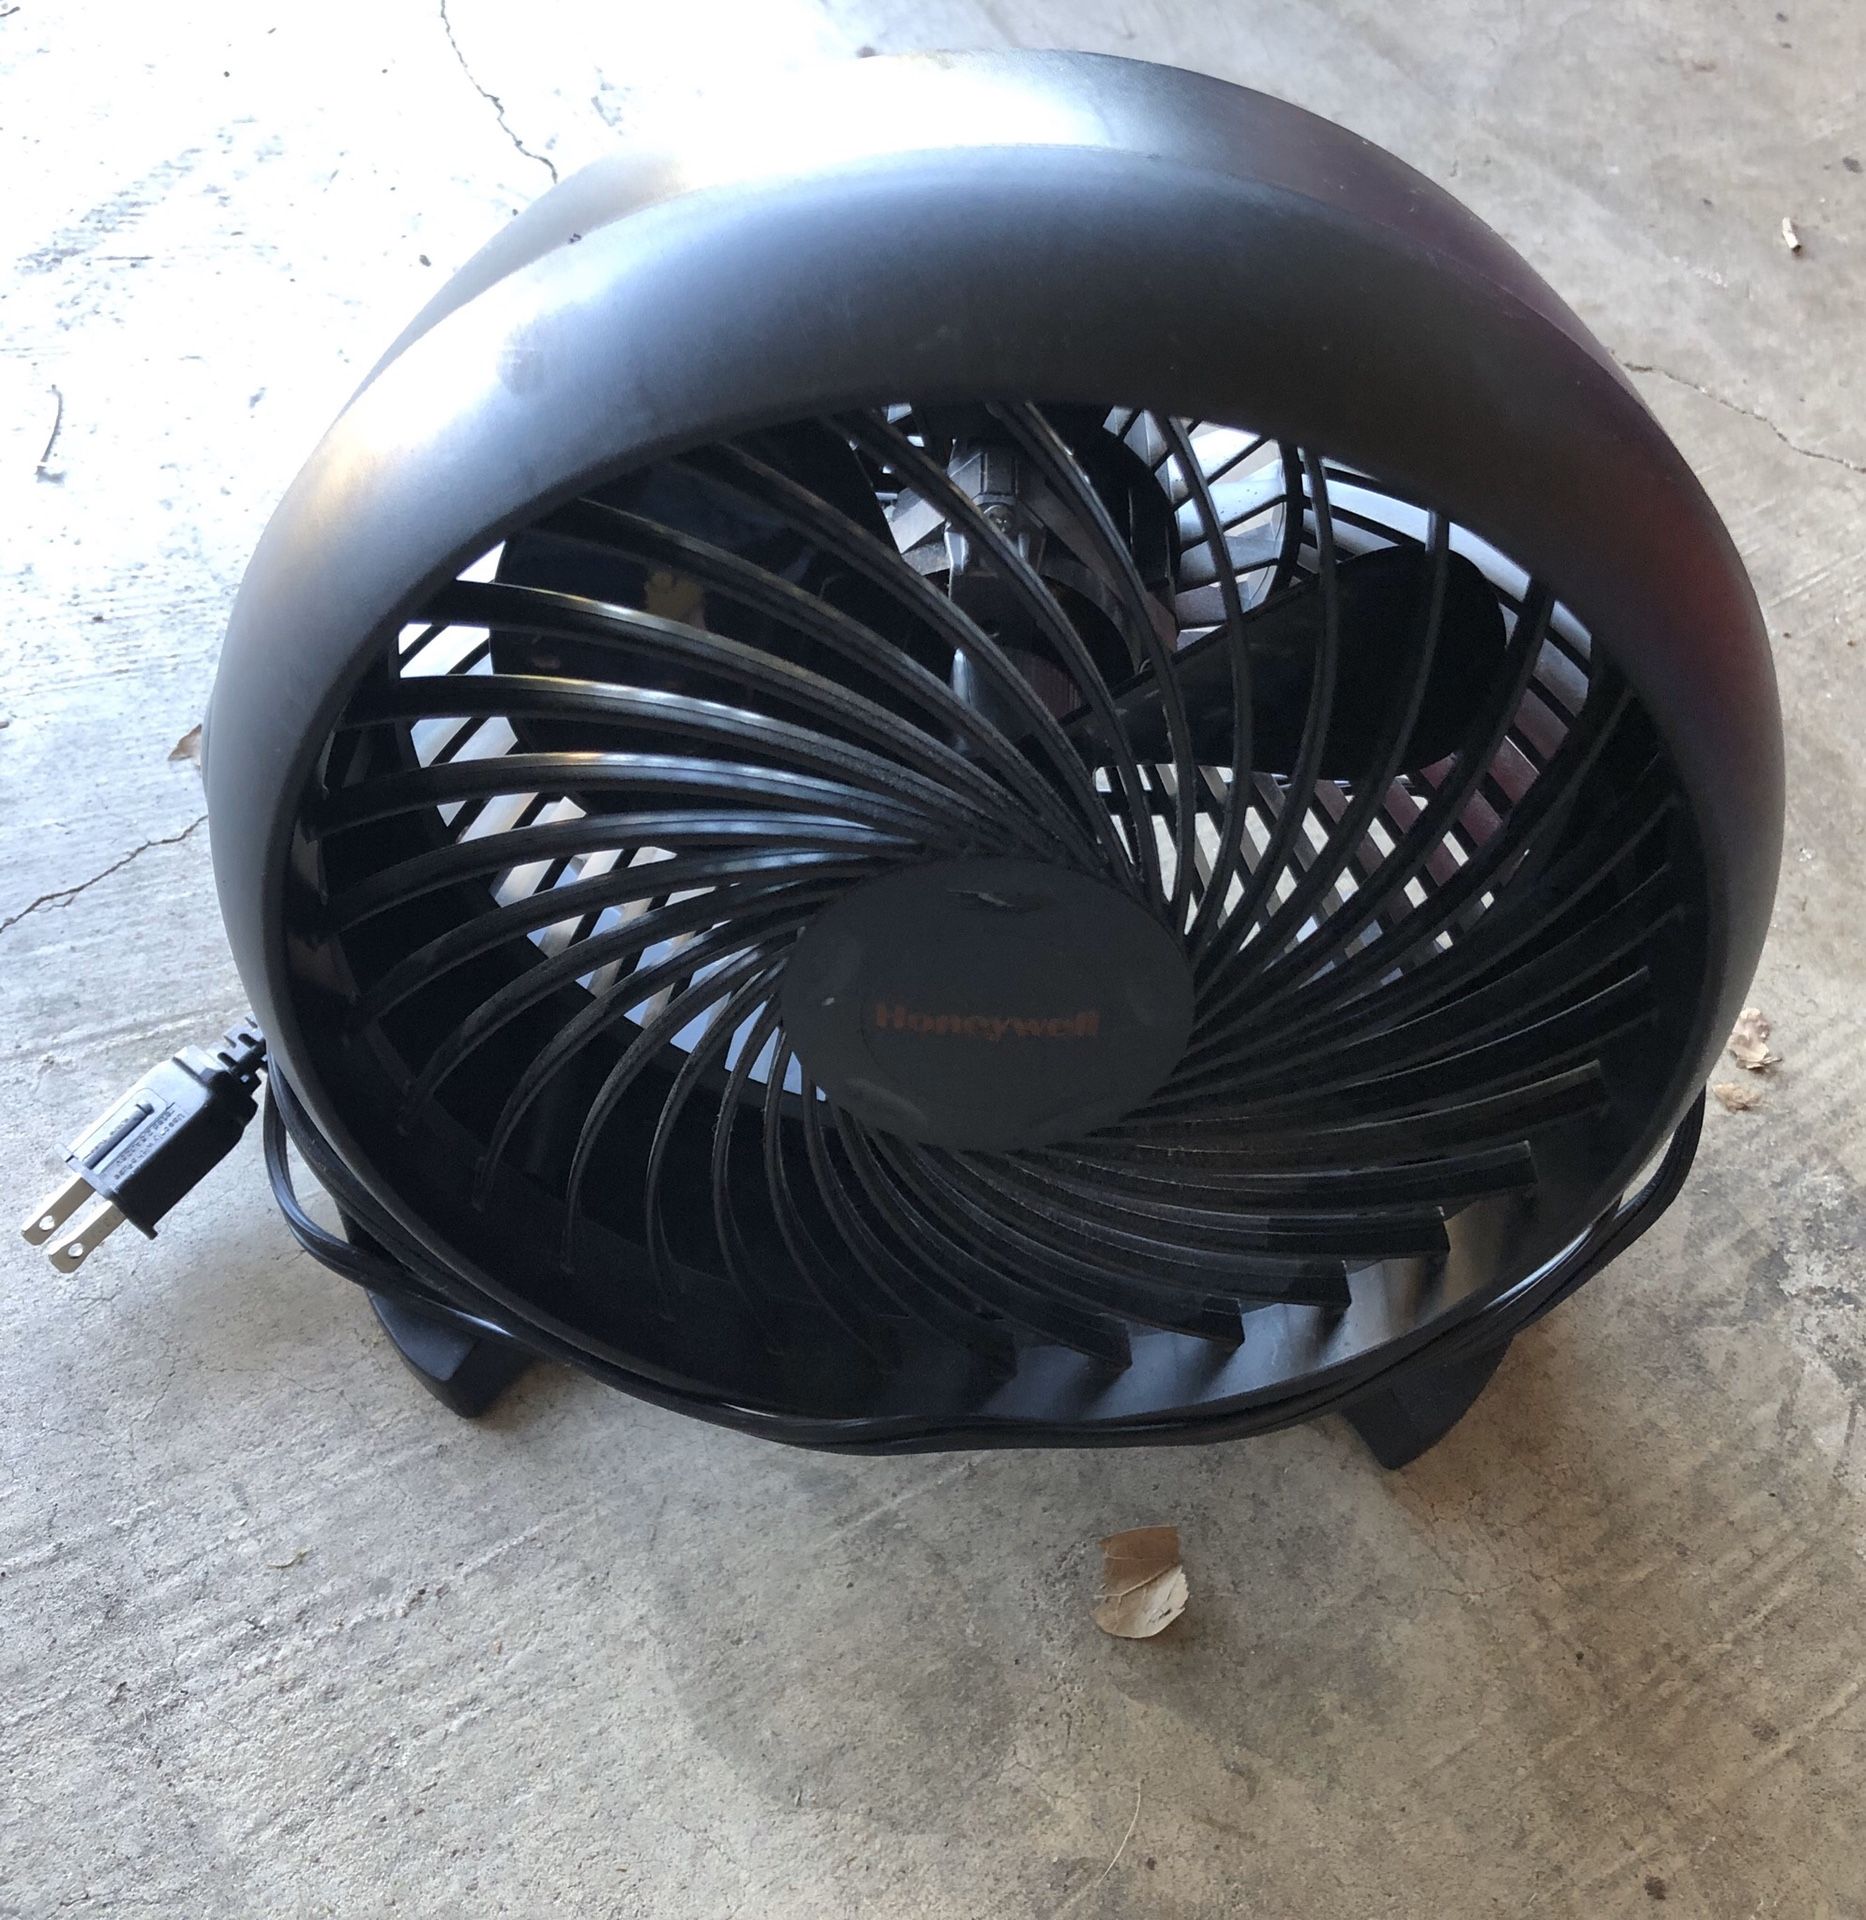 Honeywell Table Air Circulator Fan